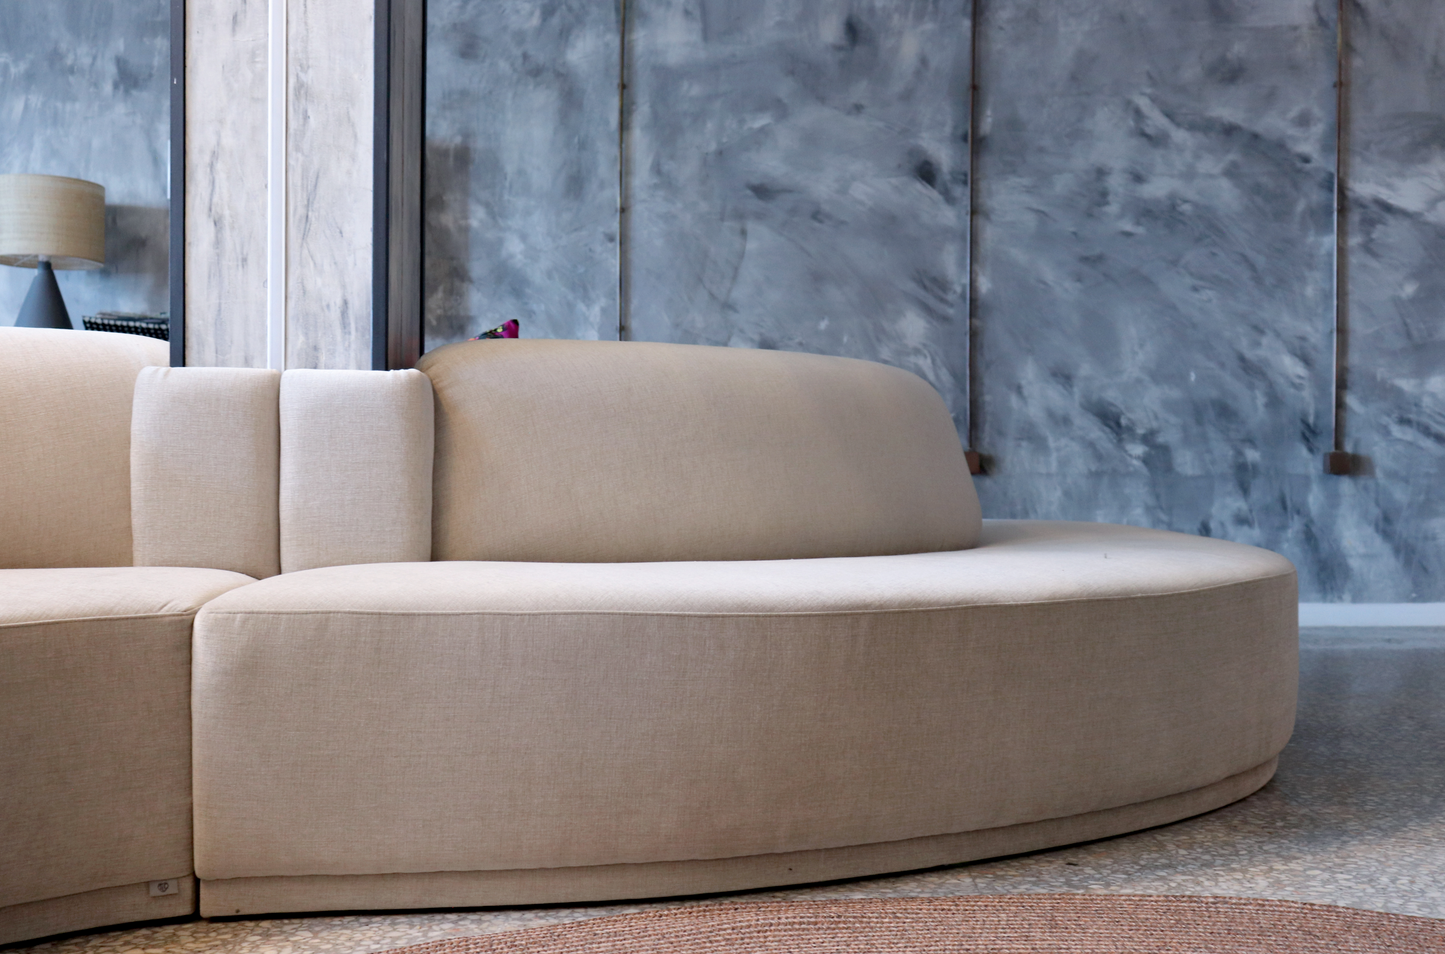 Gingal curved sofa